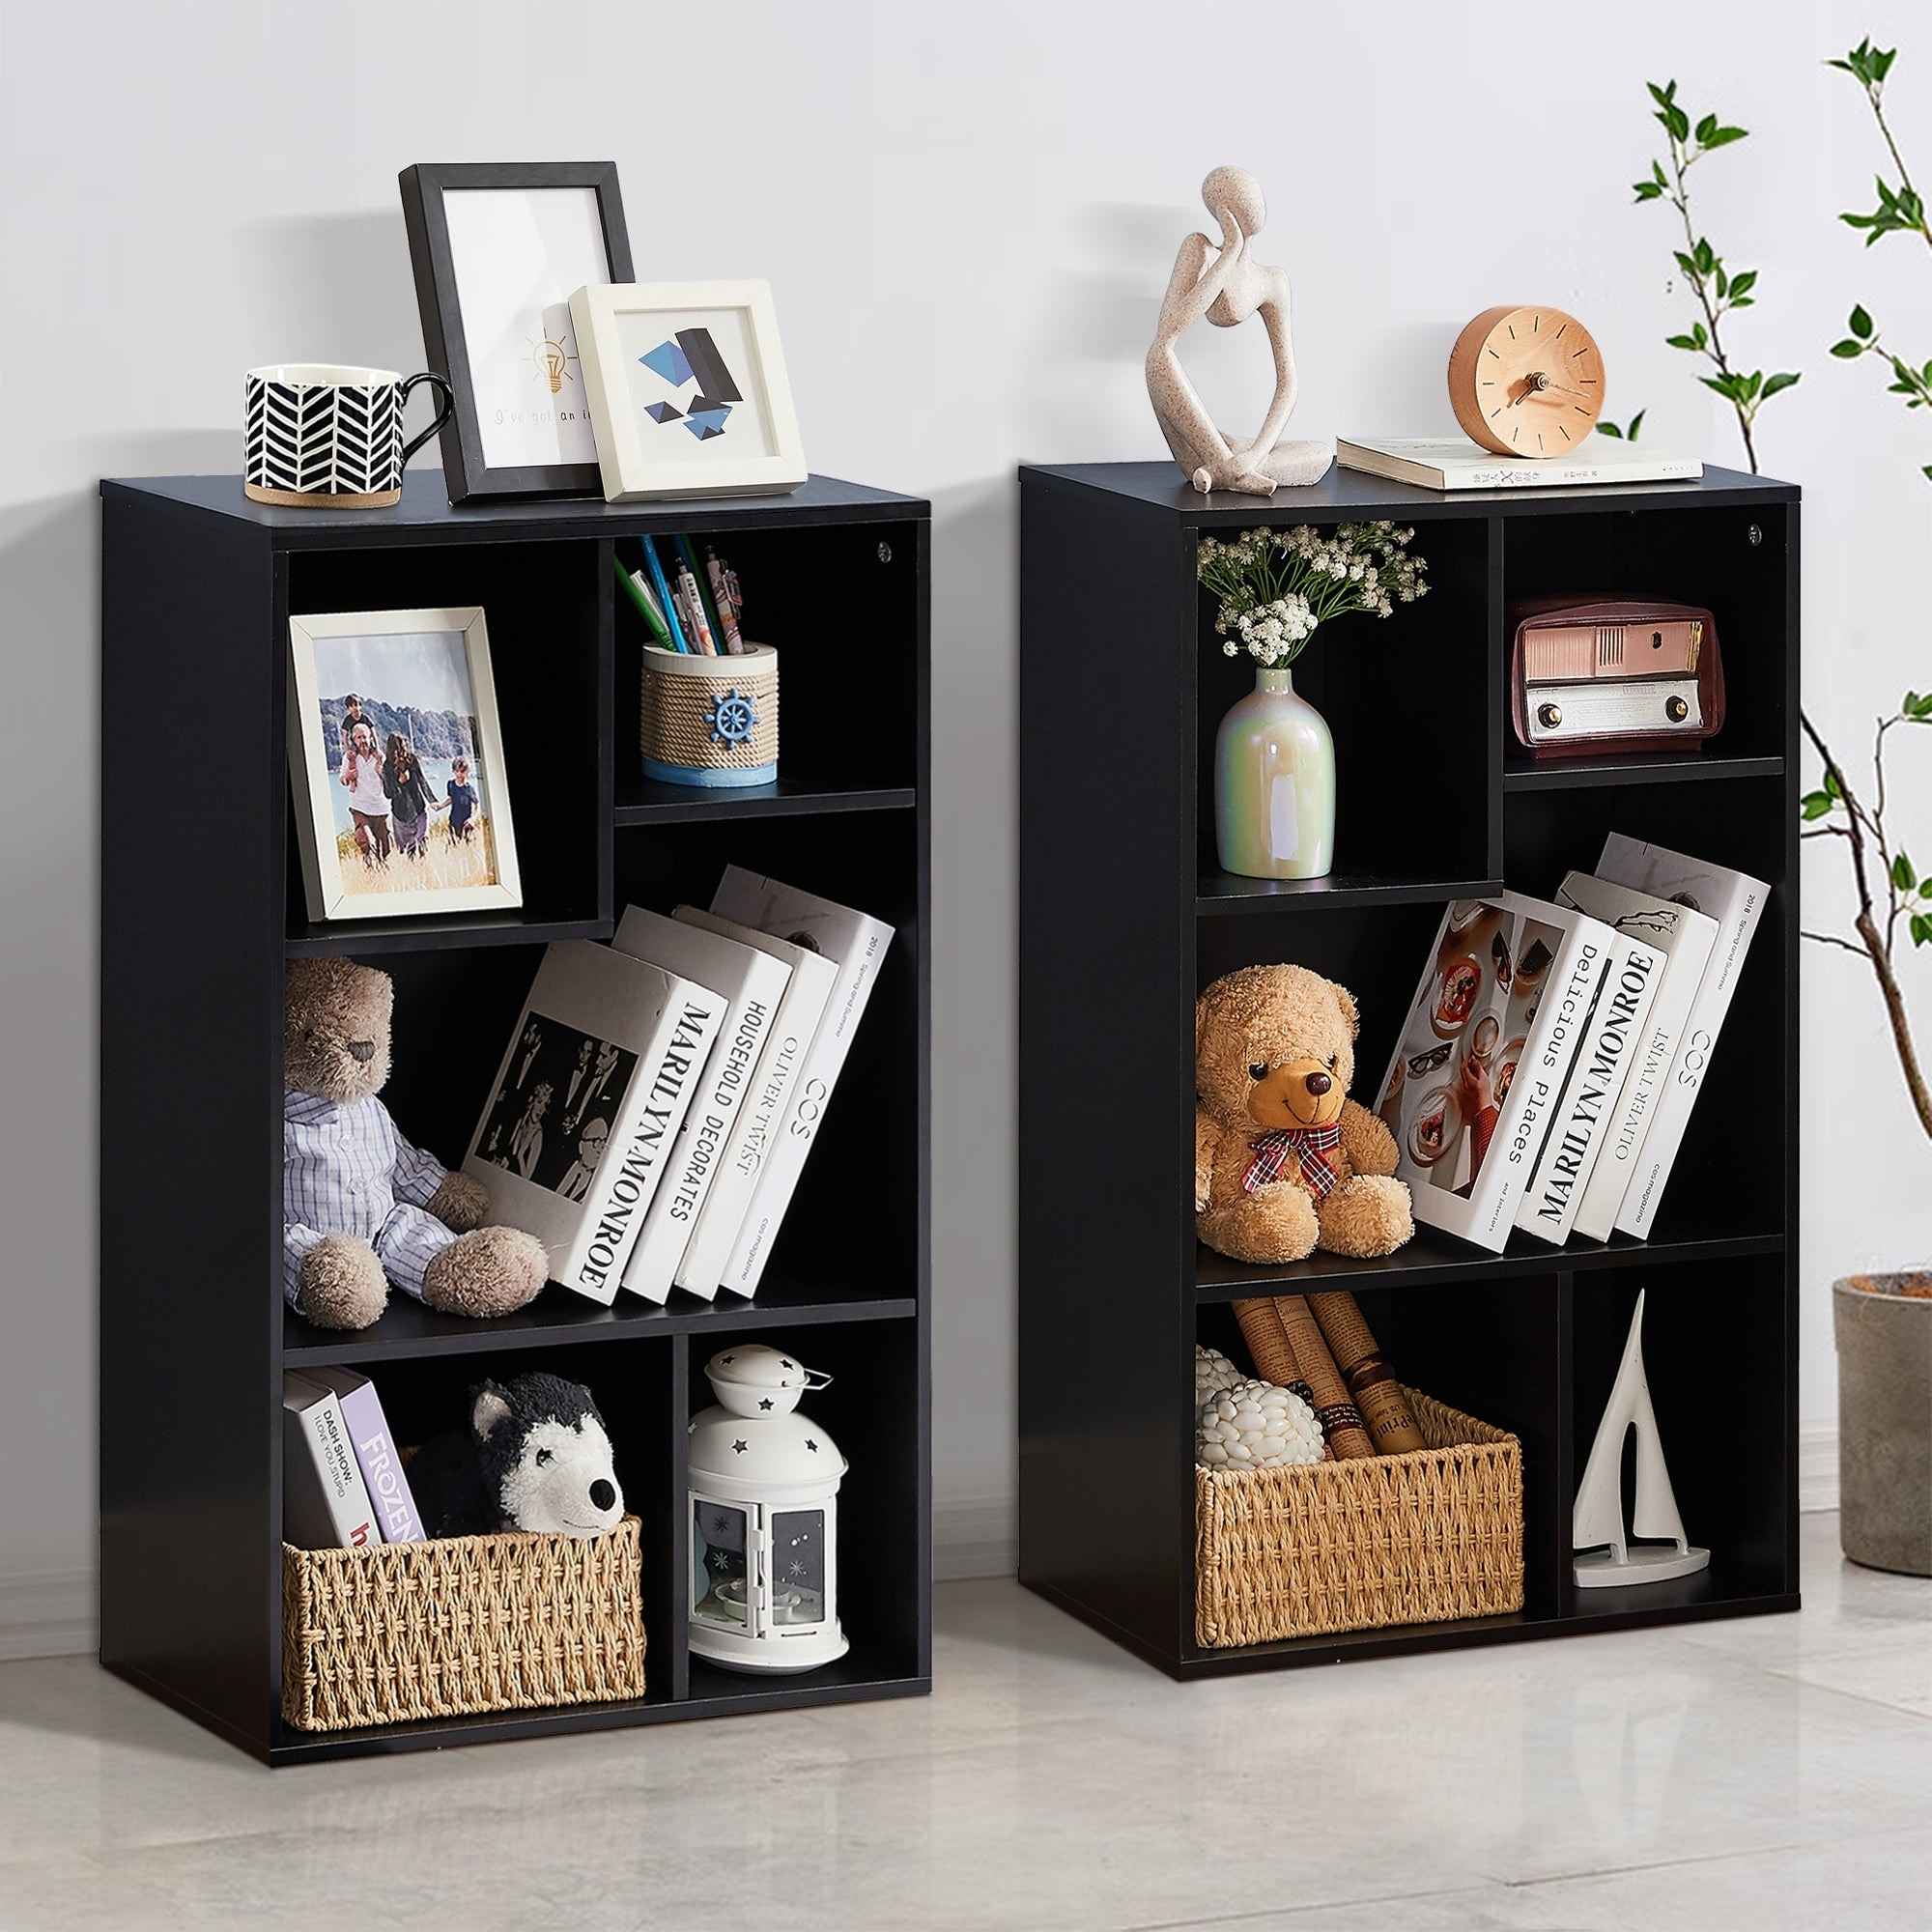 4 Tier Bookshelf, Set of 2 Tall Bookcase Shelf Storage Organizer